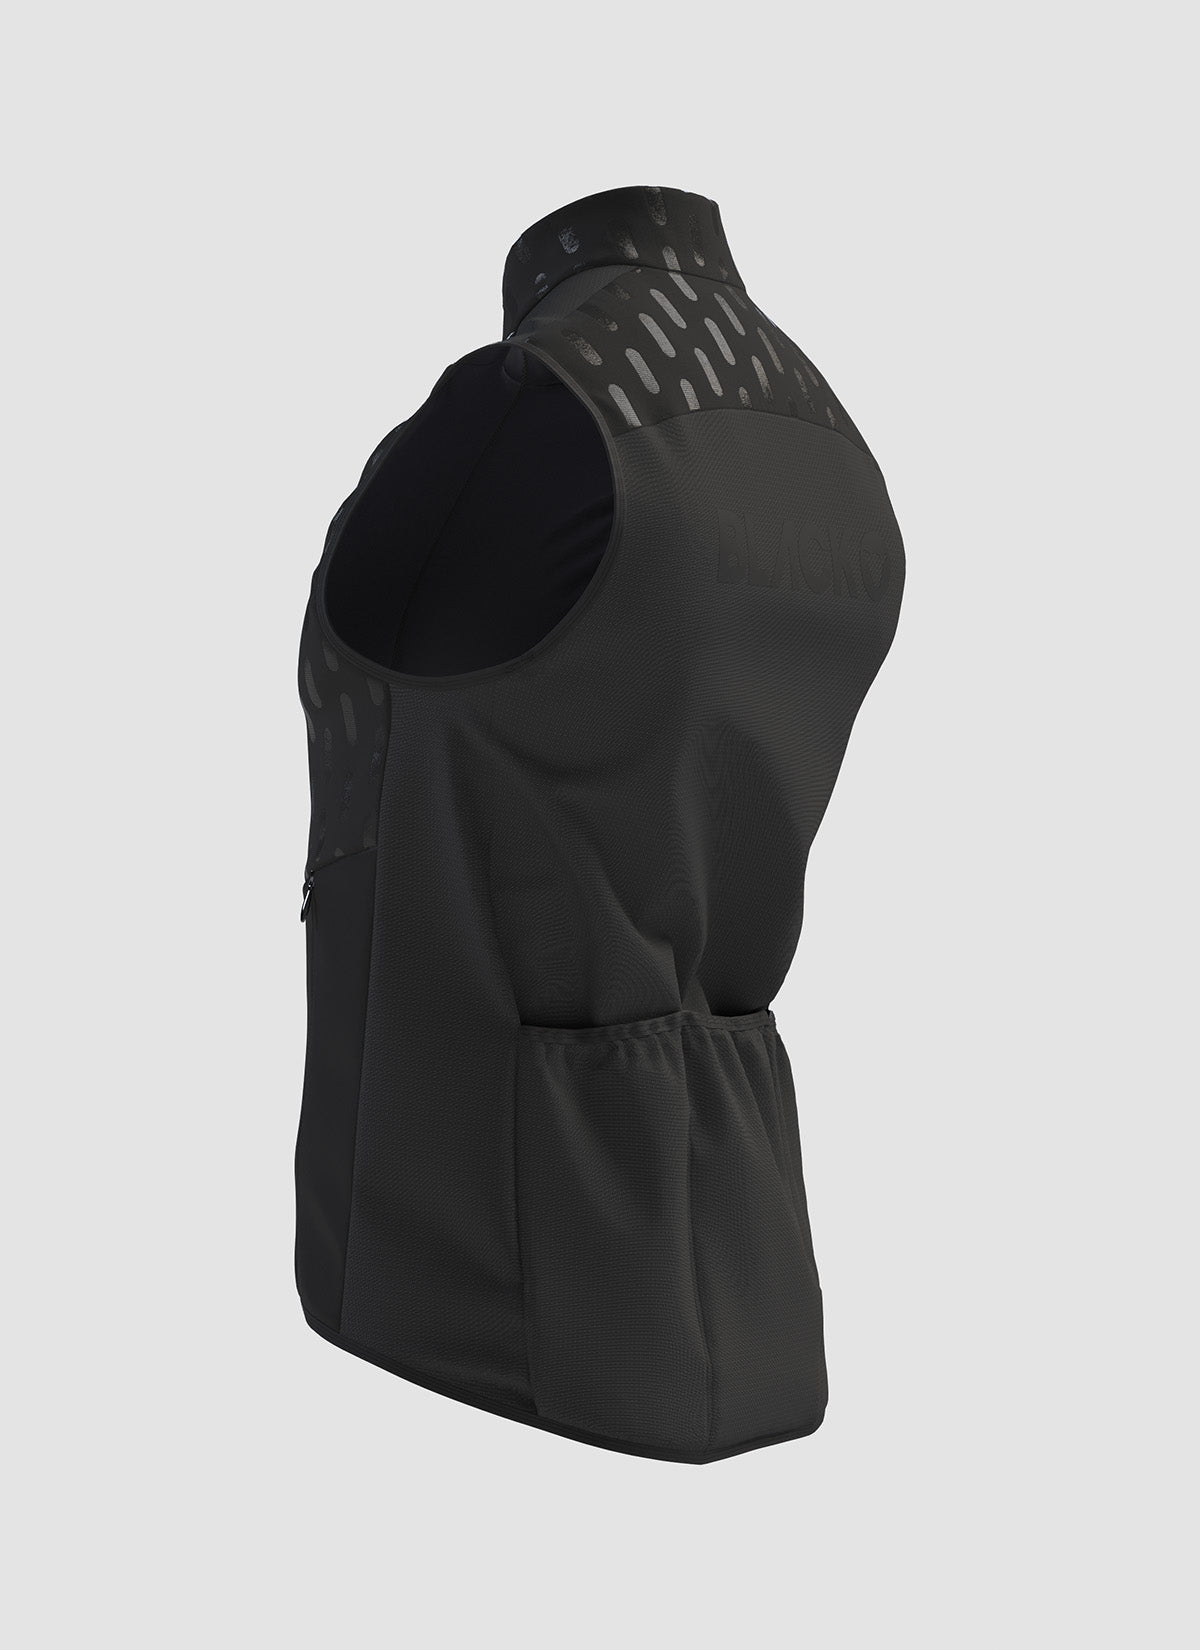 ActiveDown Vest - Black